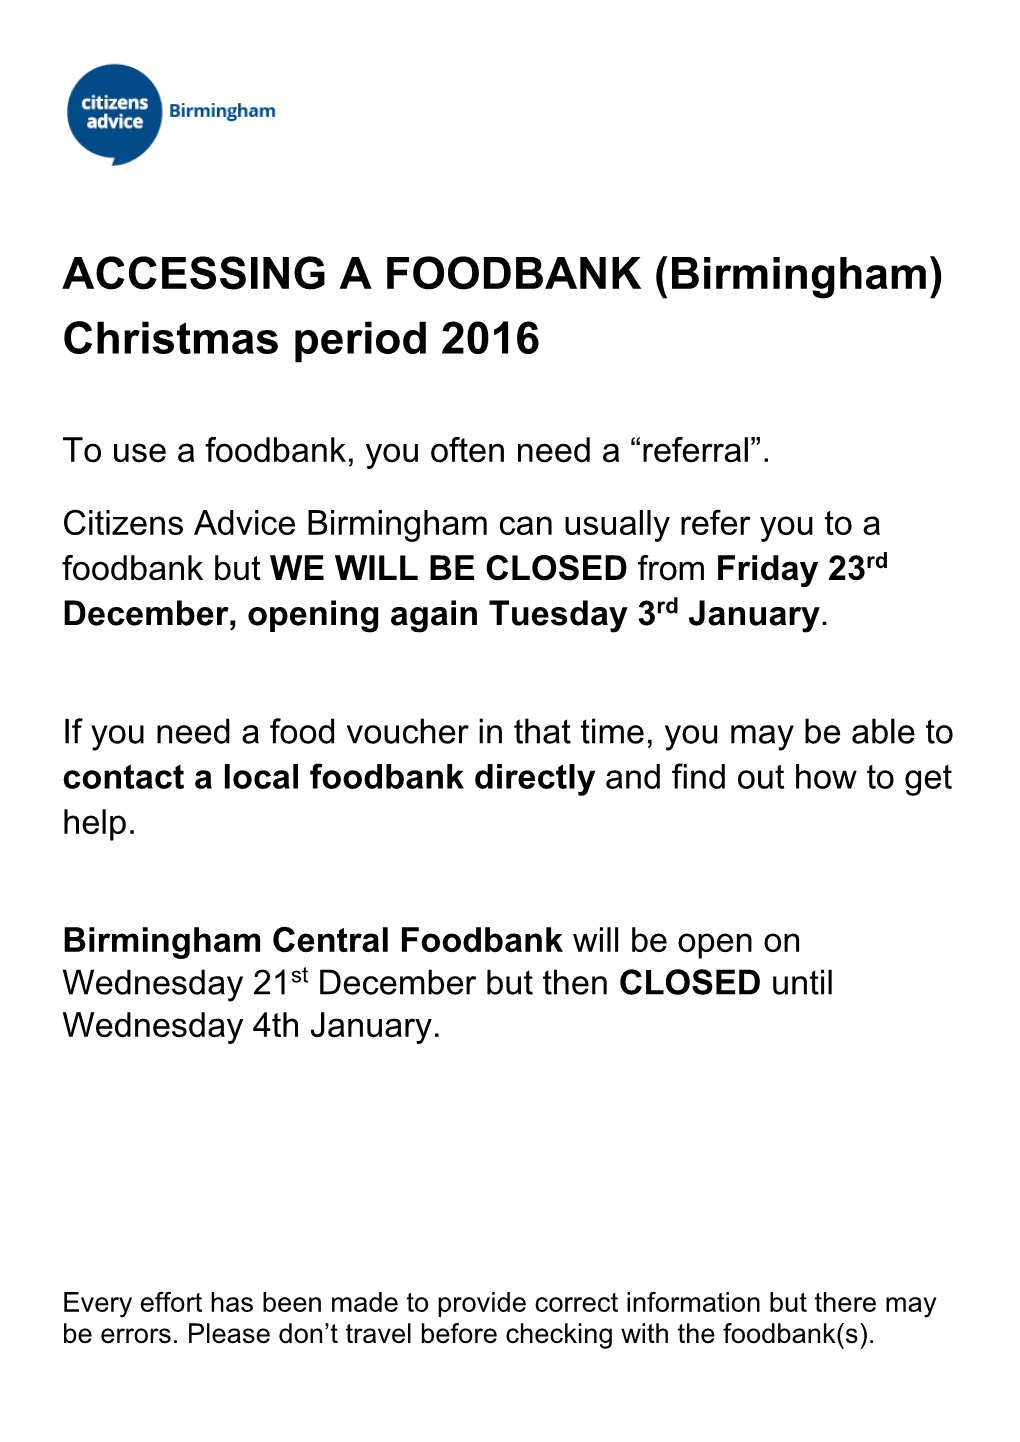 ACCESSING a FOODBANK (Birmingham) Christmas Period 2016